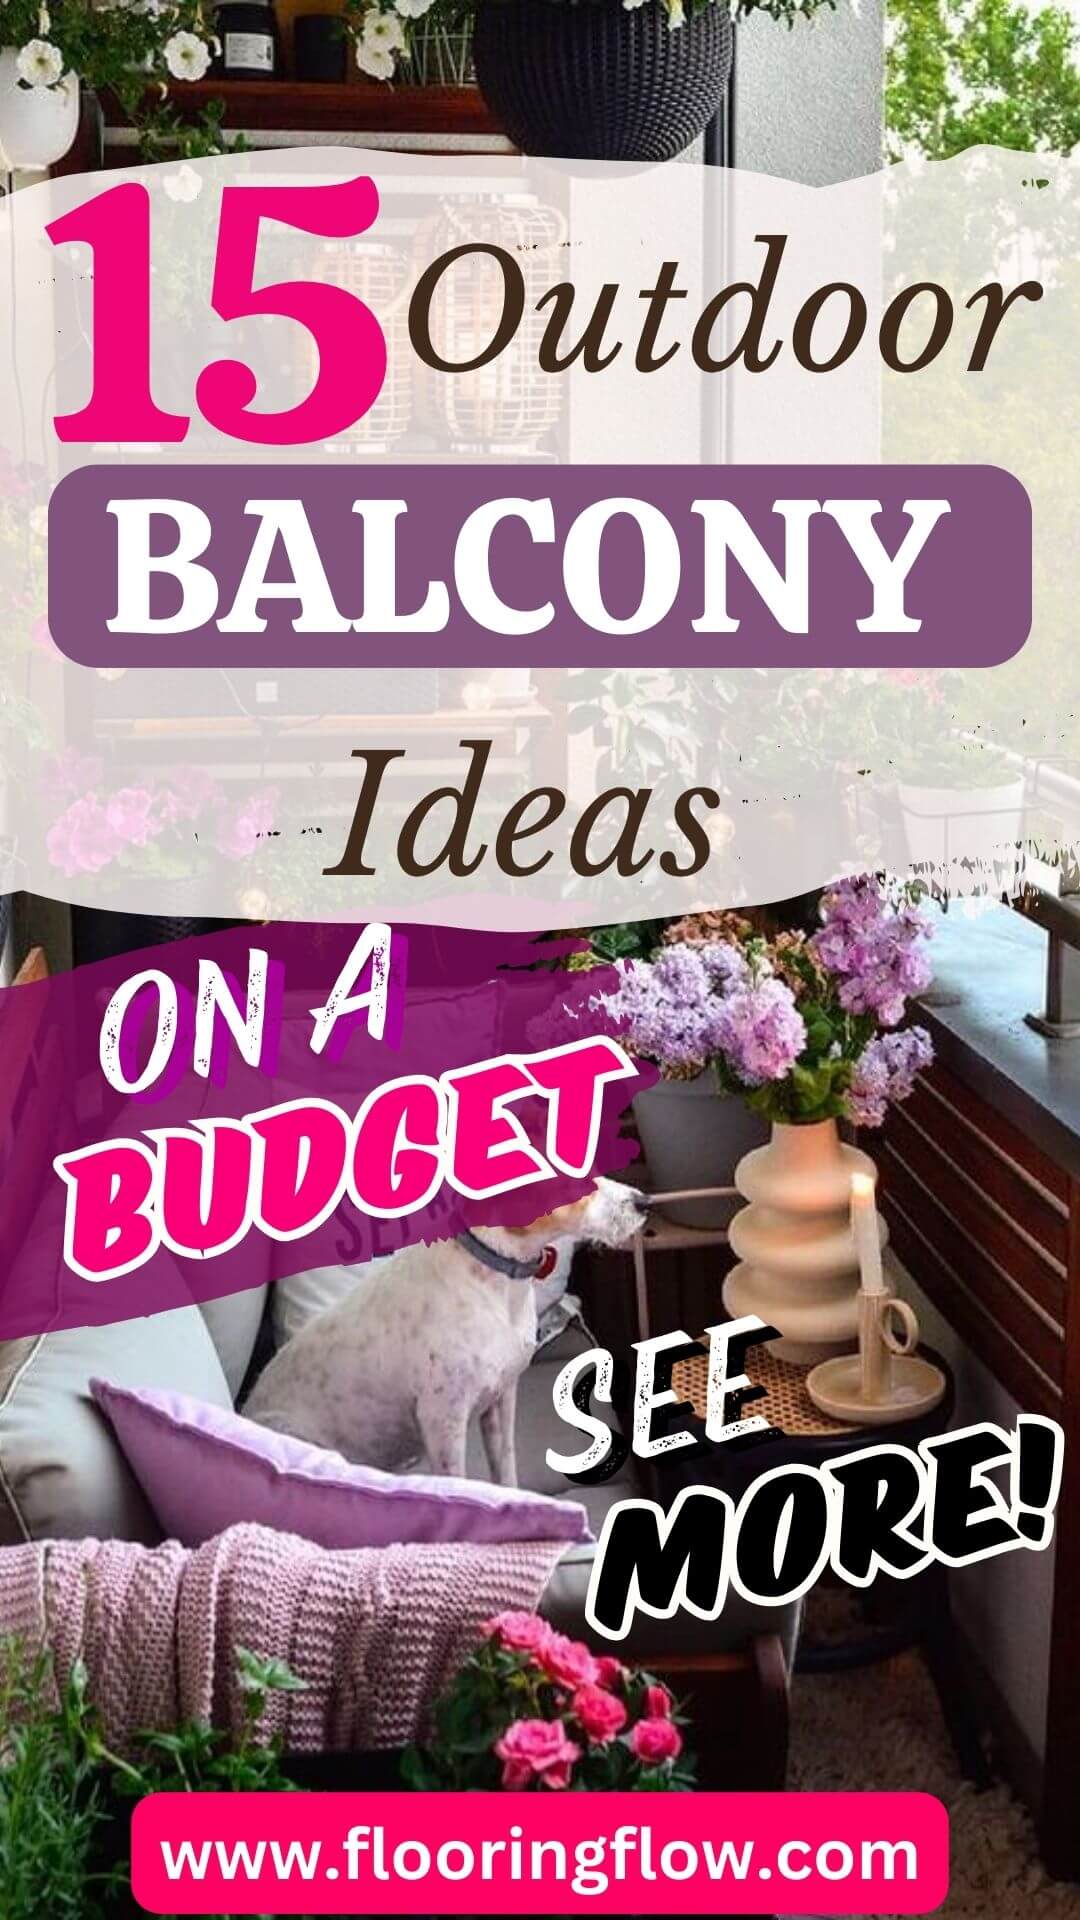 Outdoor Balcony Ideas On A Budget